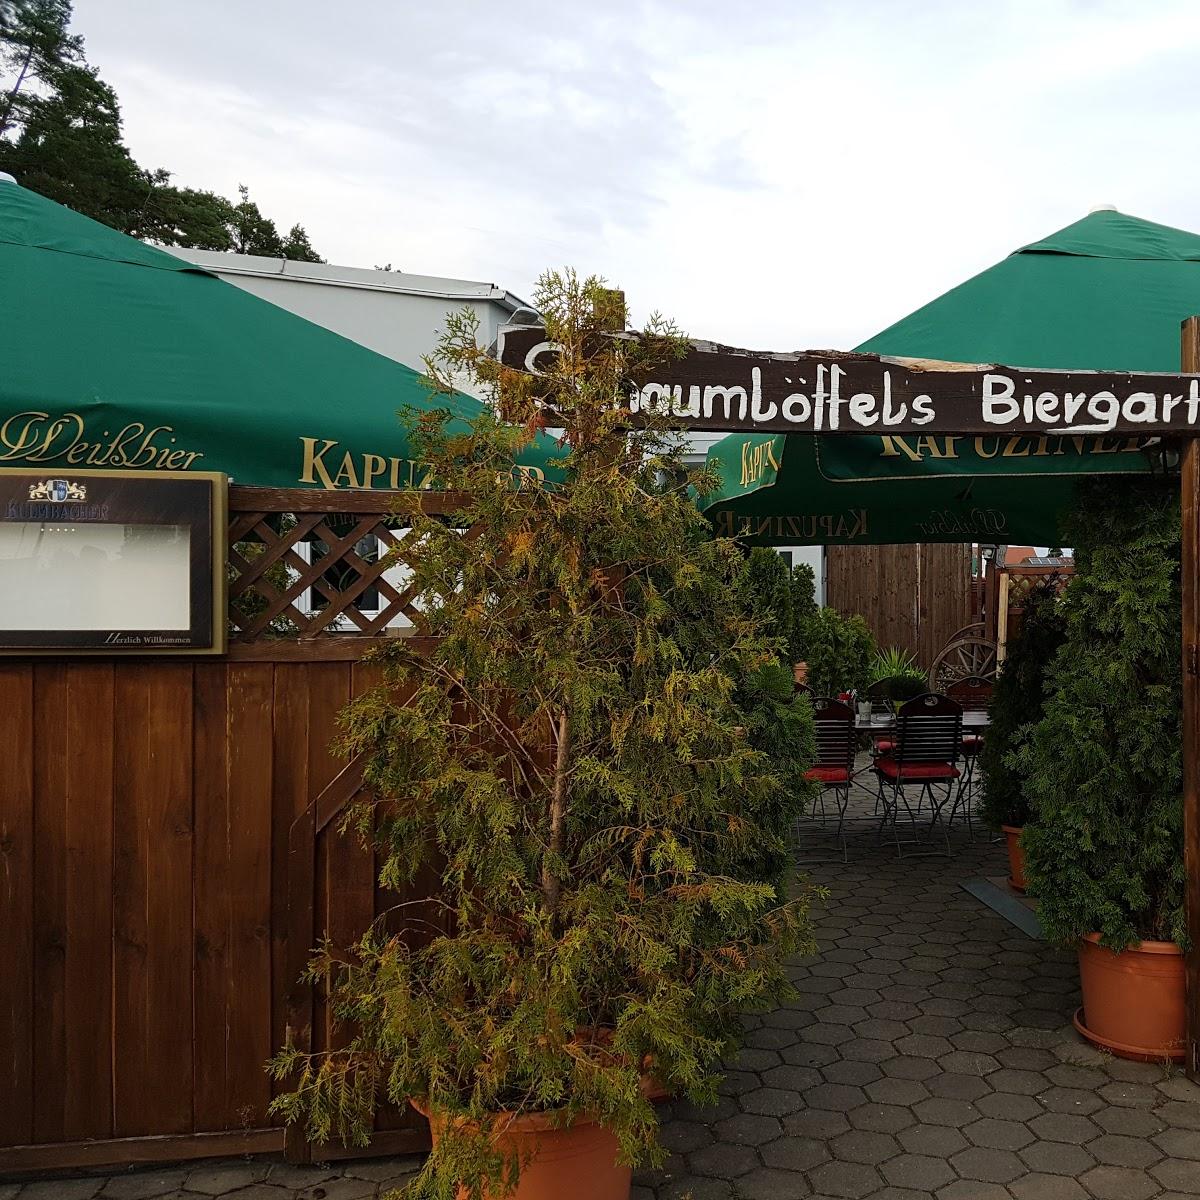 Restaurant "Hotel Seebach" in  Großenseebach